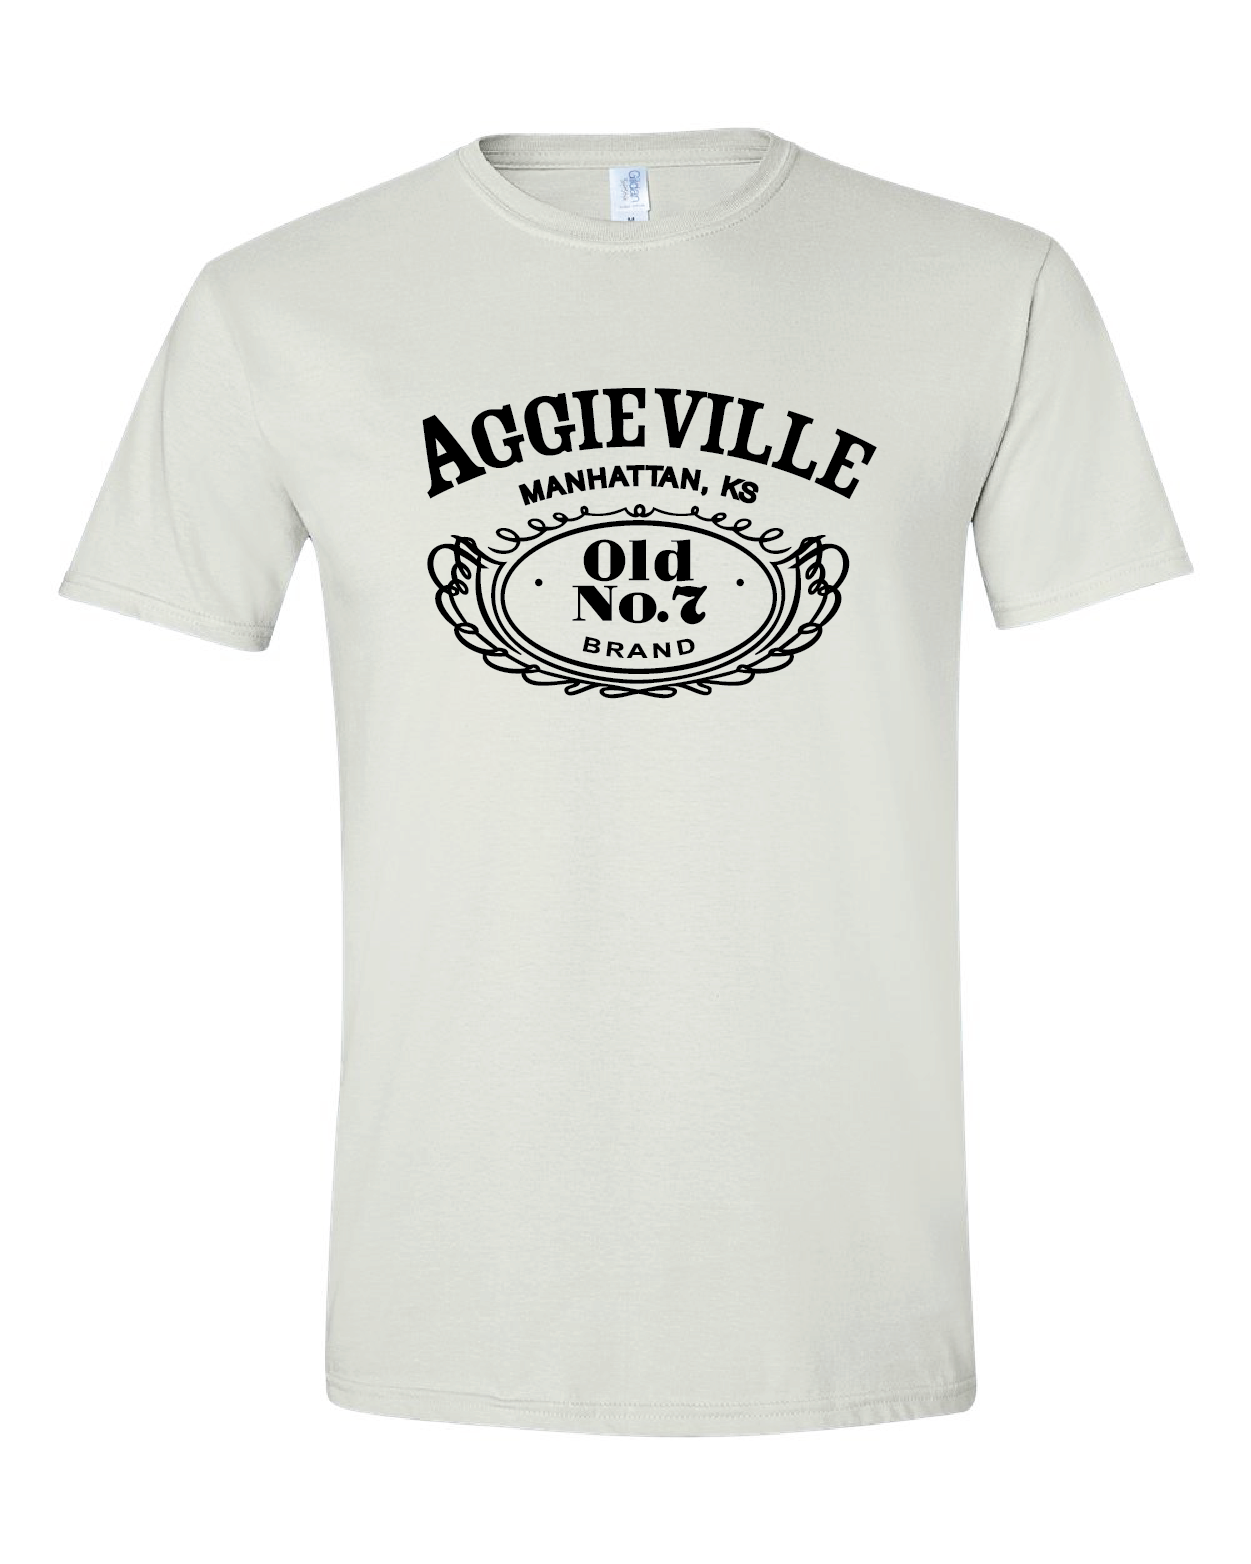 Aggieville No. 7